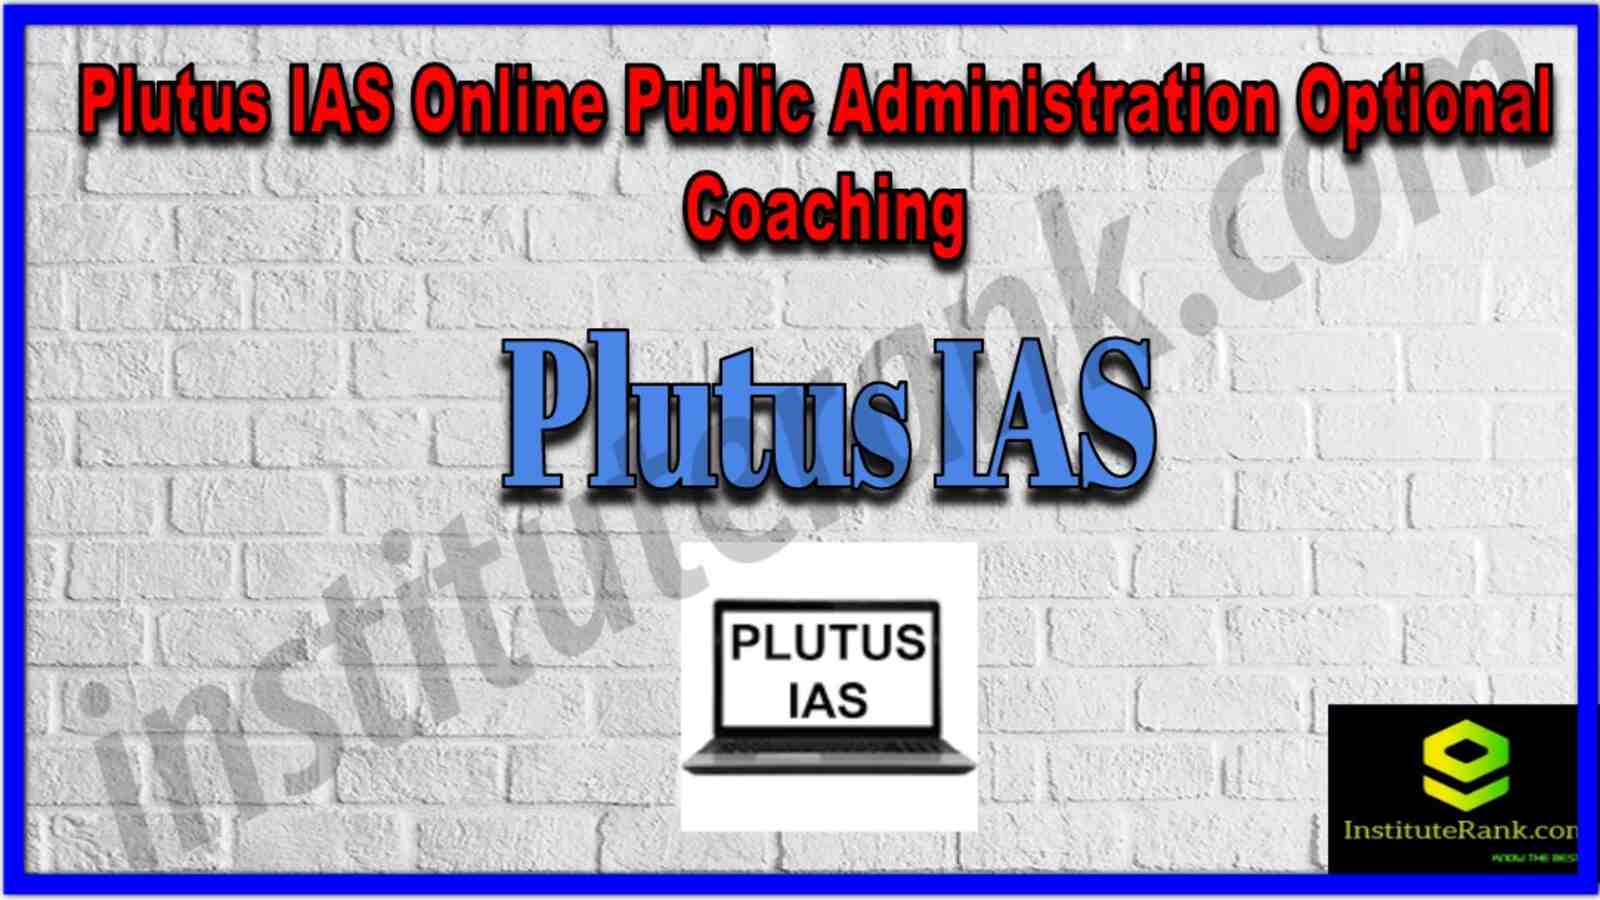 Plutus IAS Online Coaching for Public Administration Optional